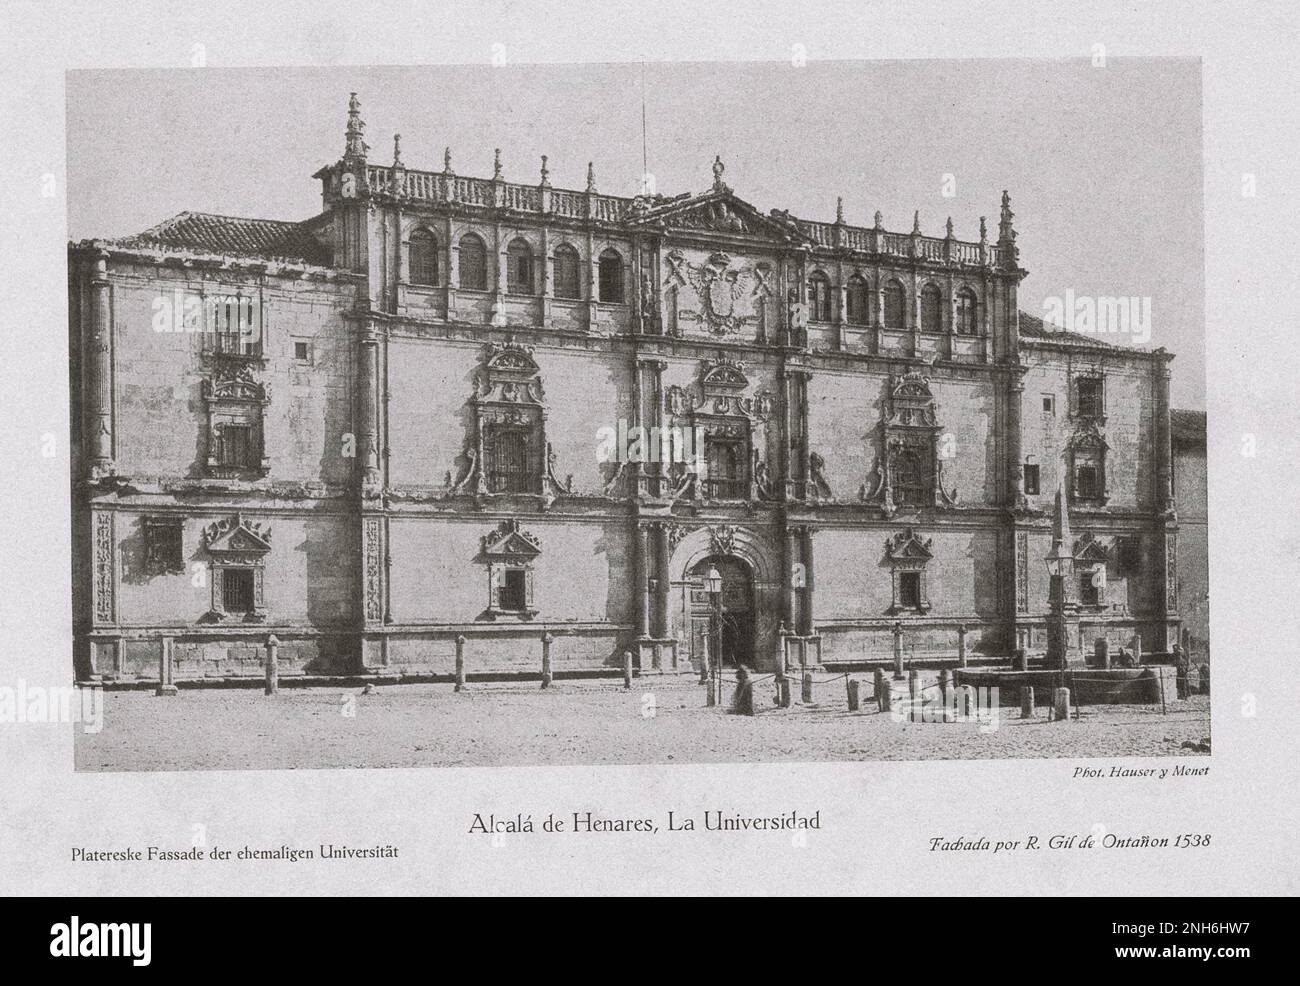 Architecture of Old Spain. Vintage photo of University of Alcalá (Alcala de Henares, La Universidad). Plateresque facade of the former university Stock Photo